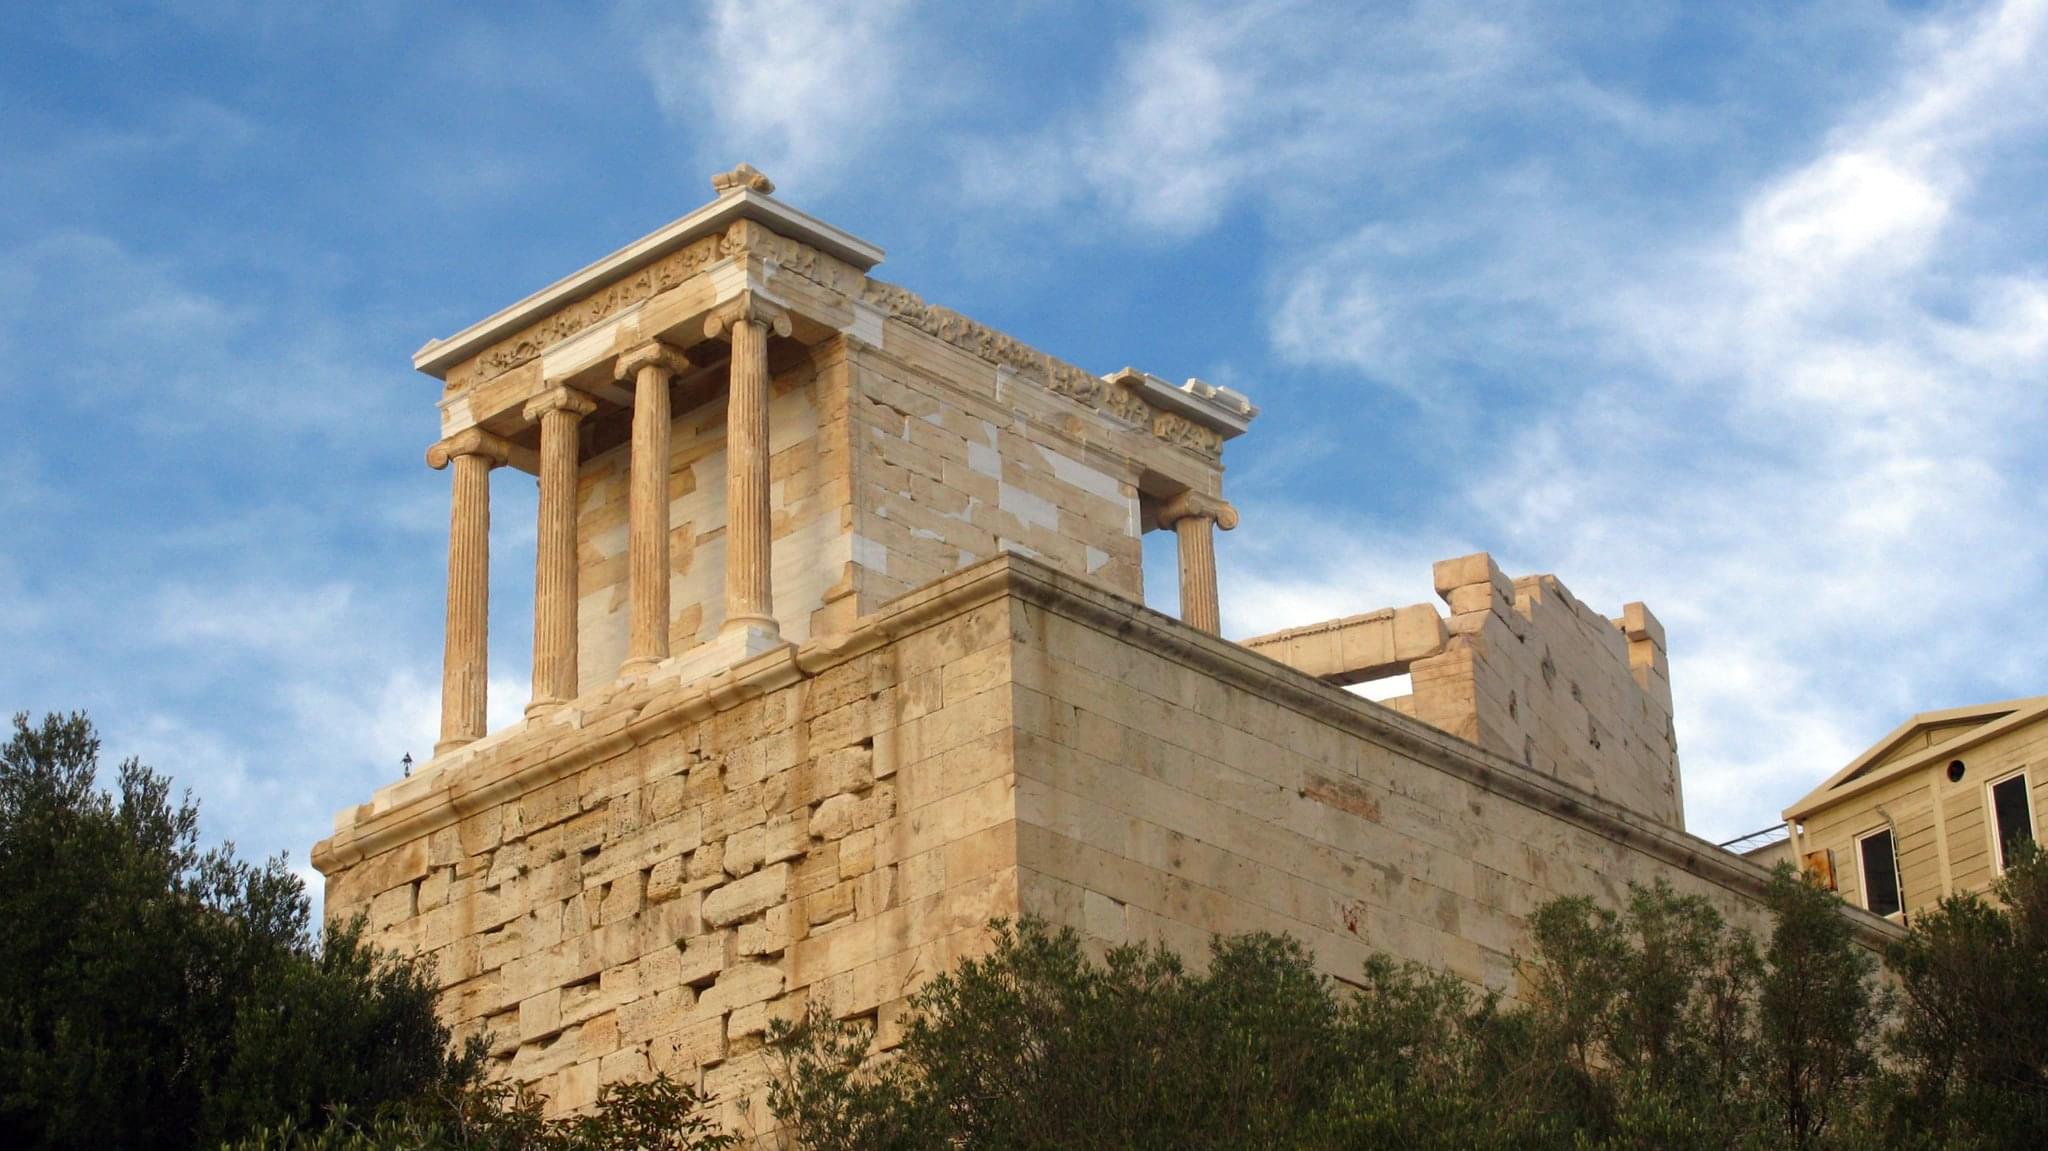 Temple of Athena Nike